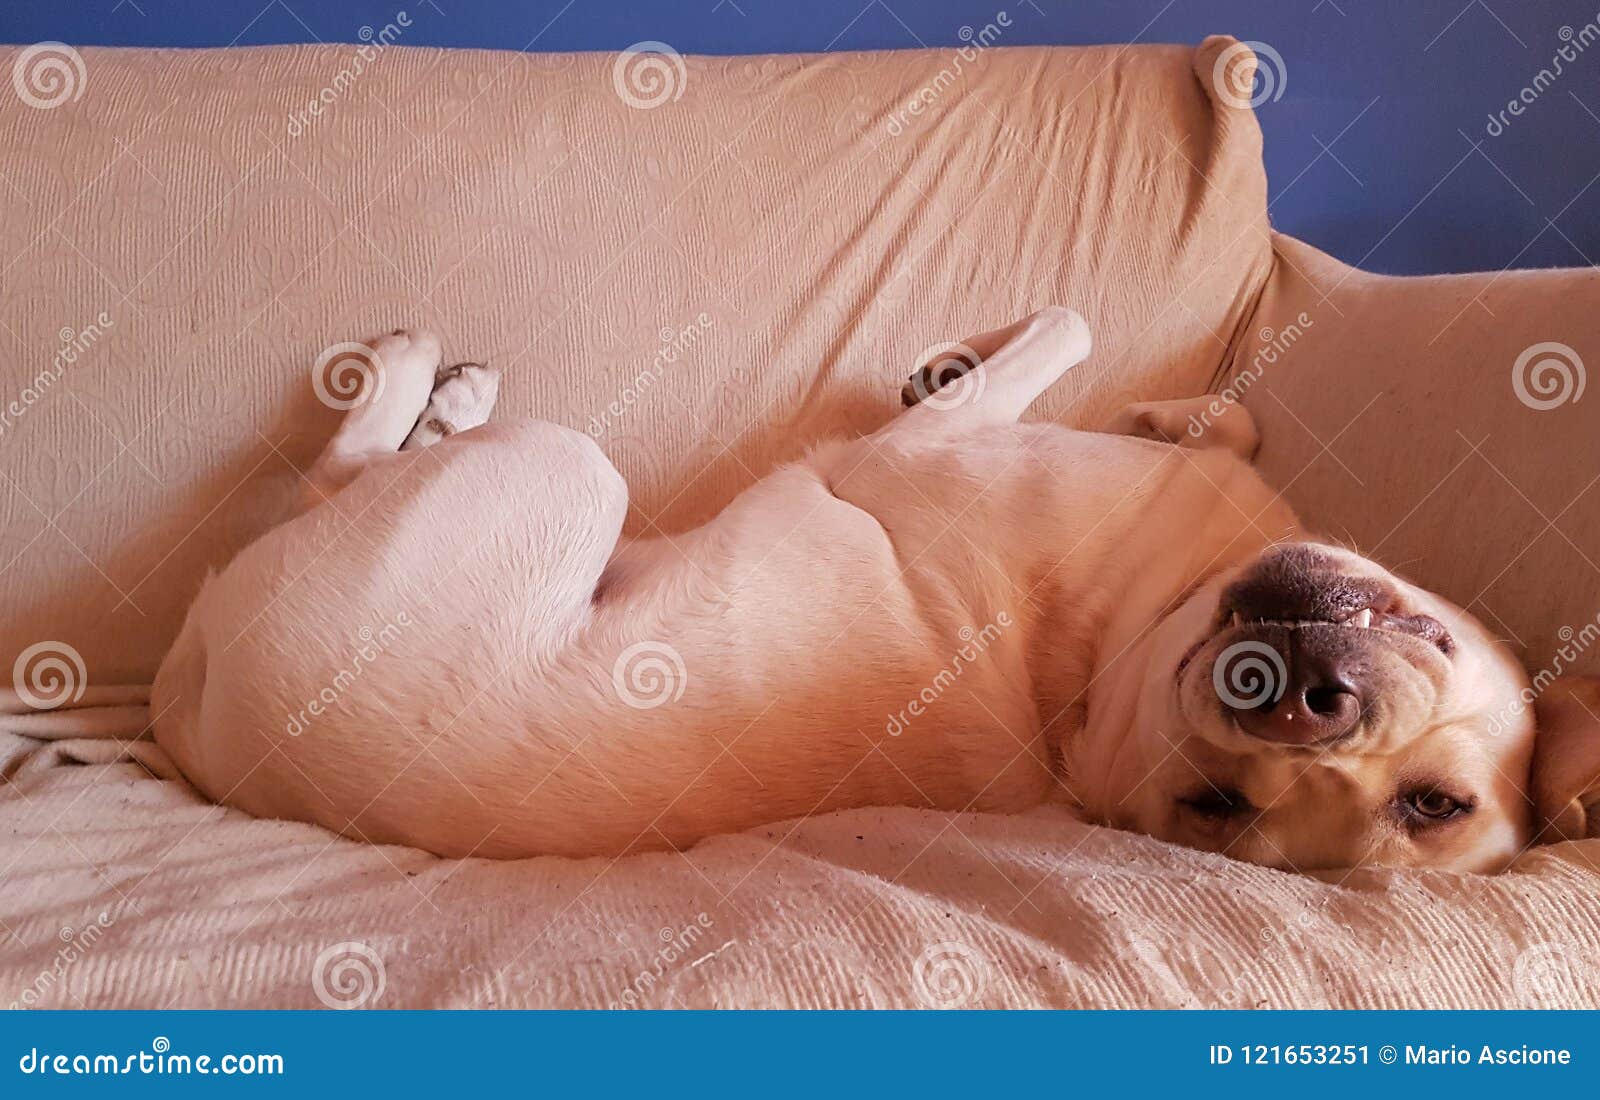 a funny dog on a sofa.